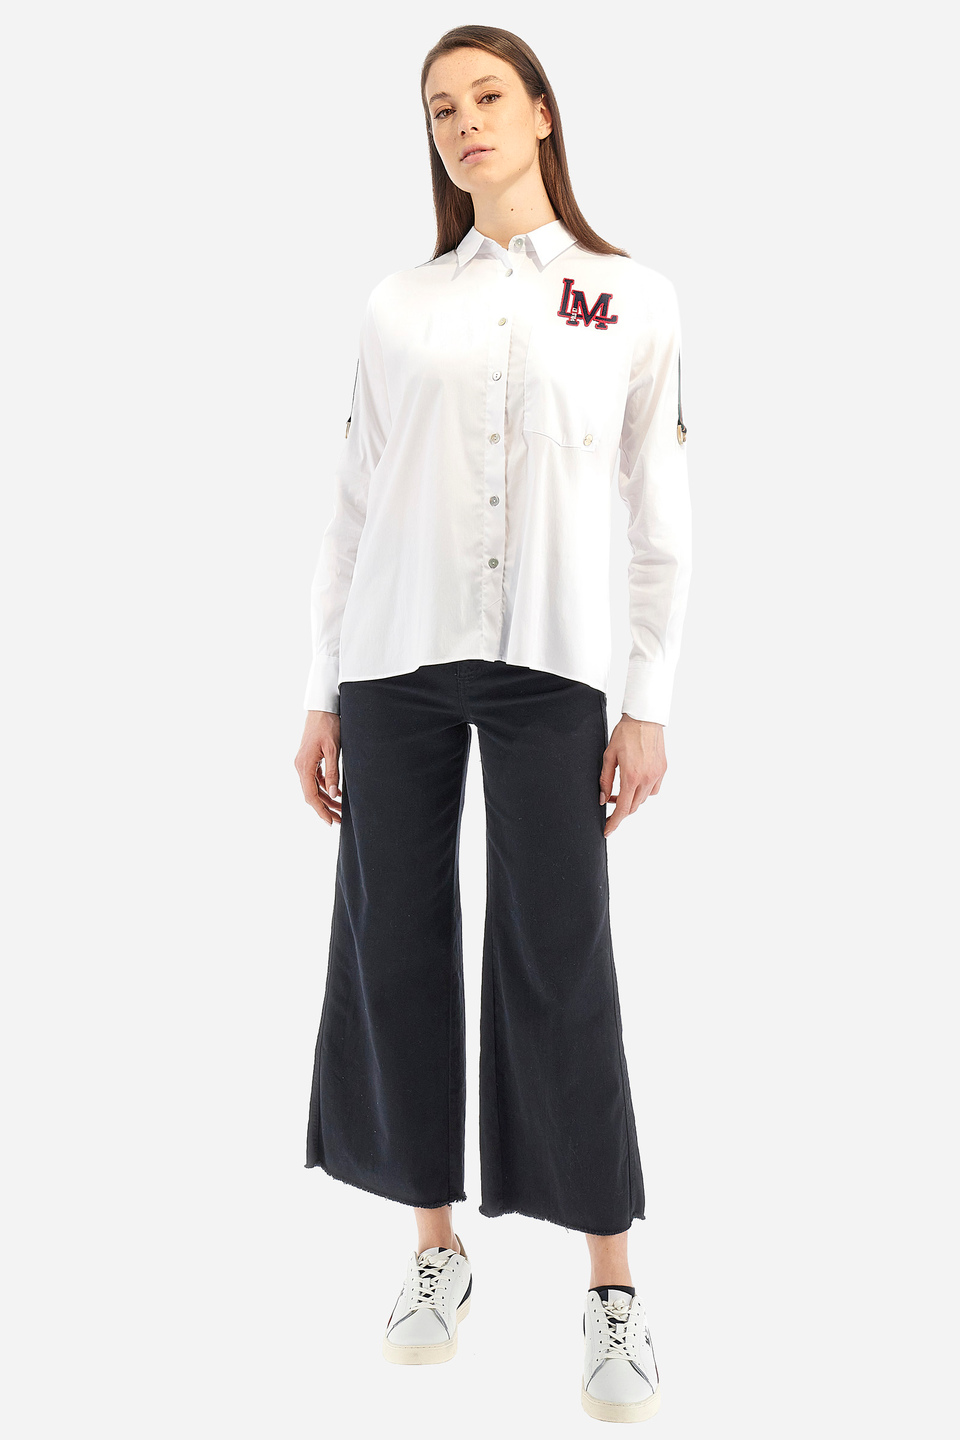 Women's shirt in a regular fit - Wava | La Martina - Official Online Shop